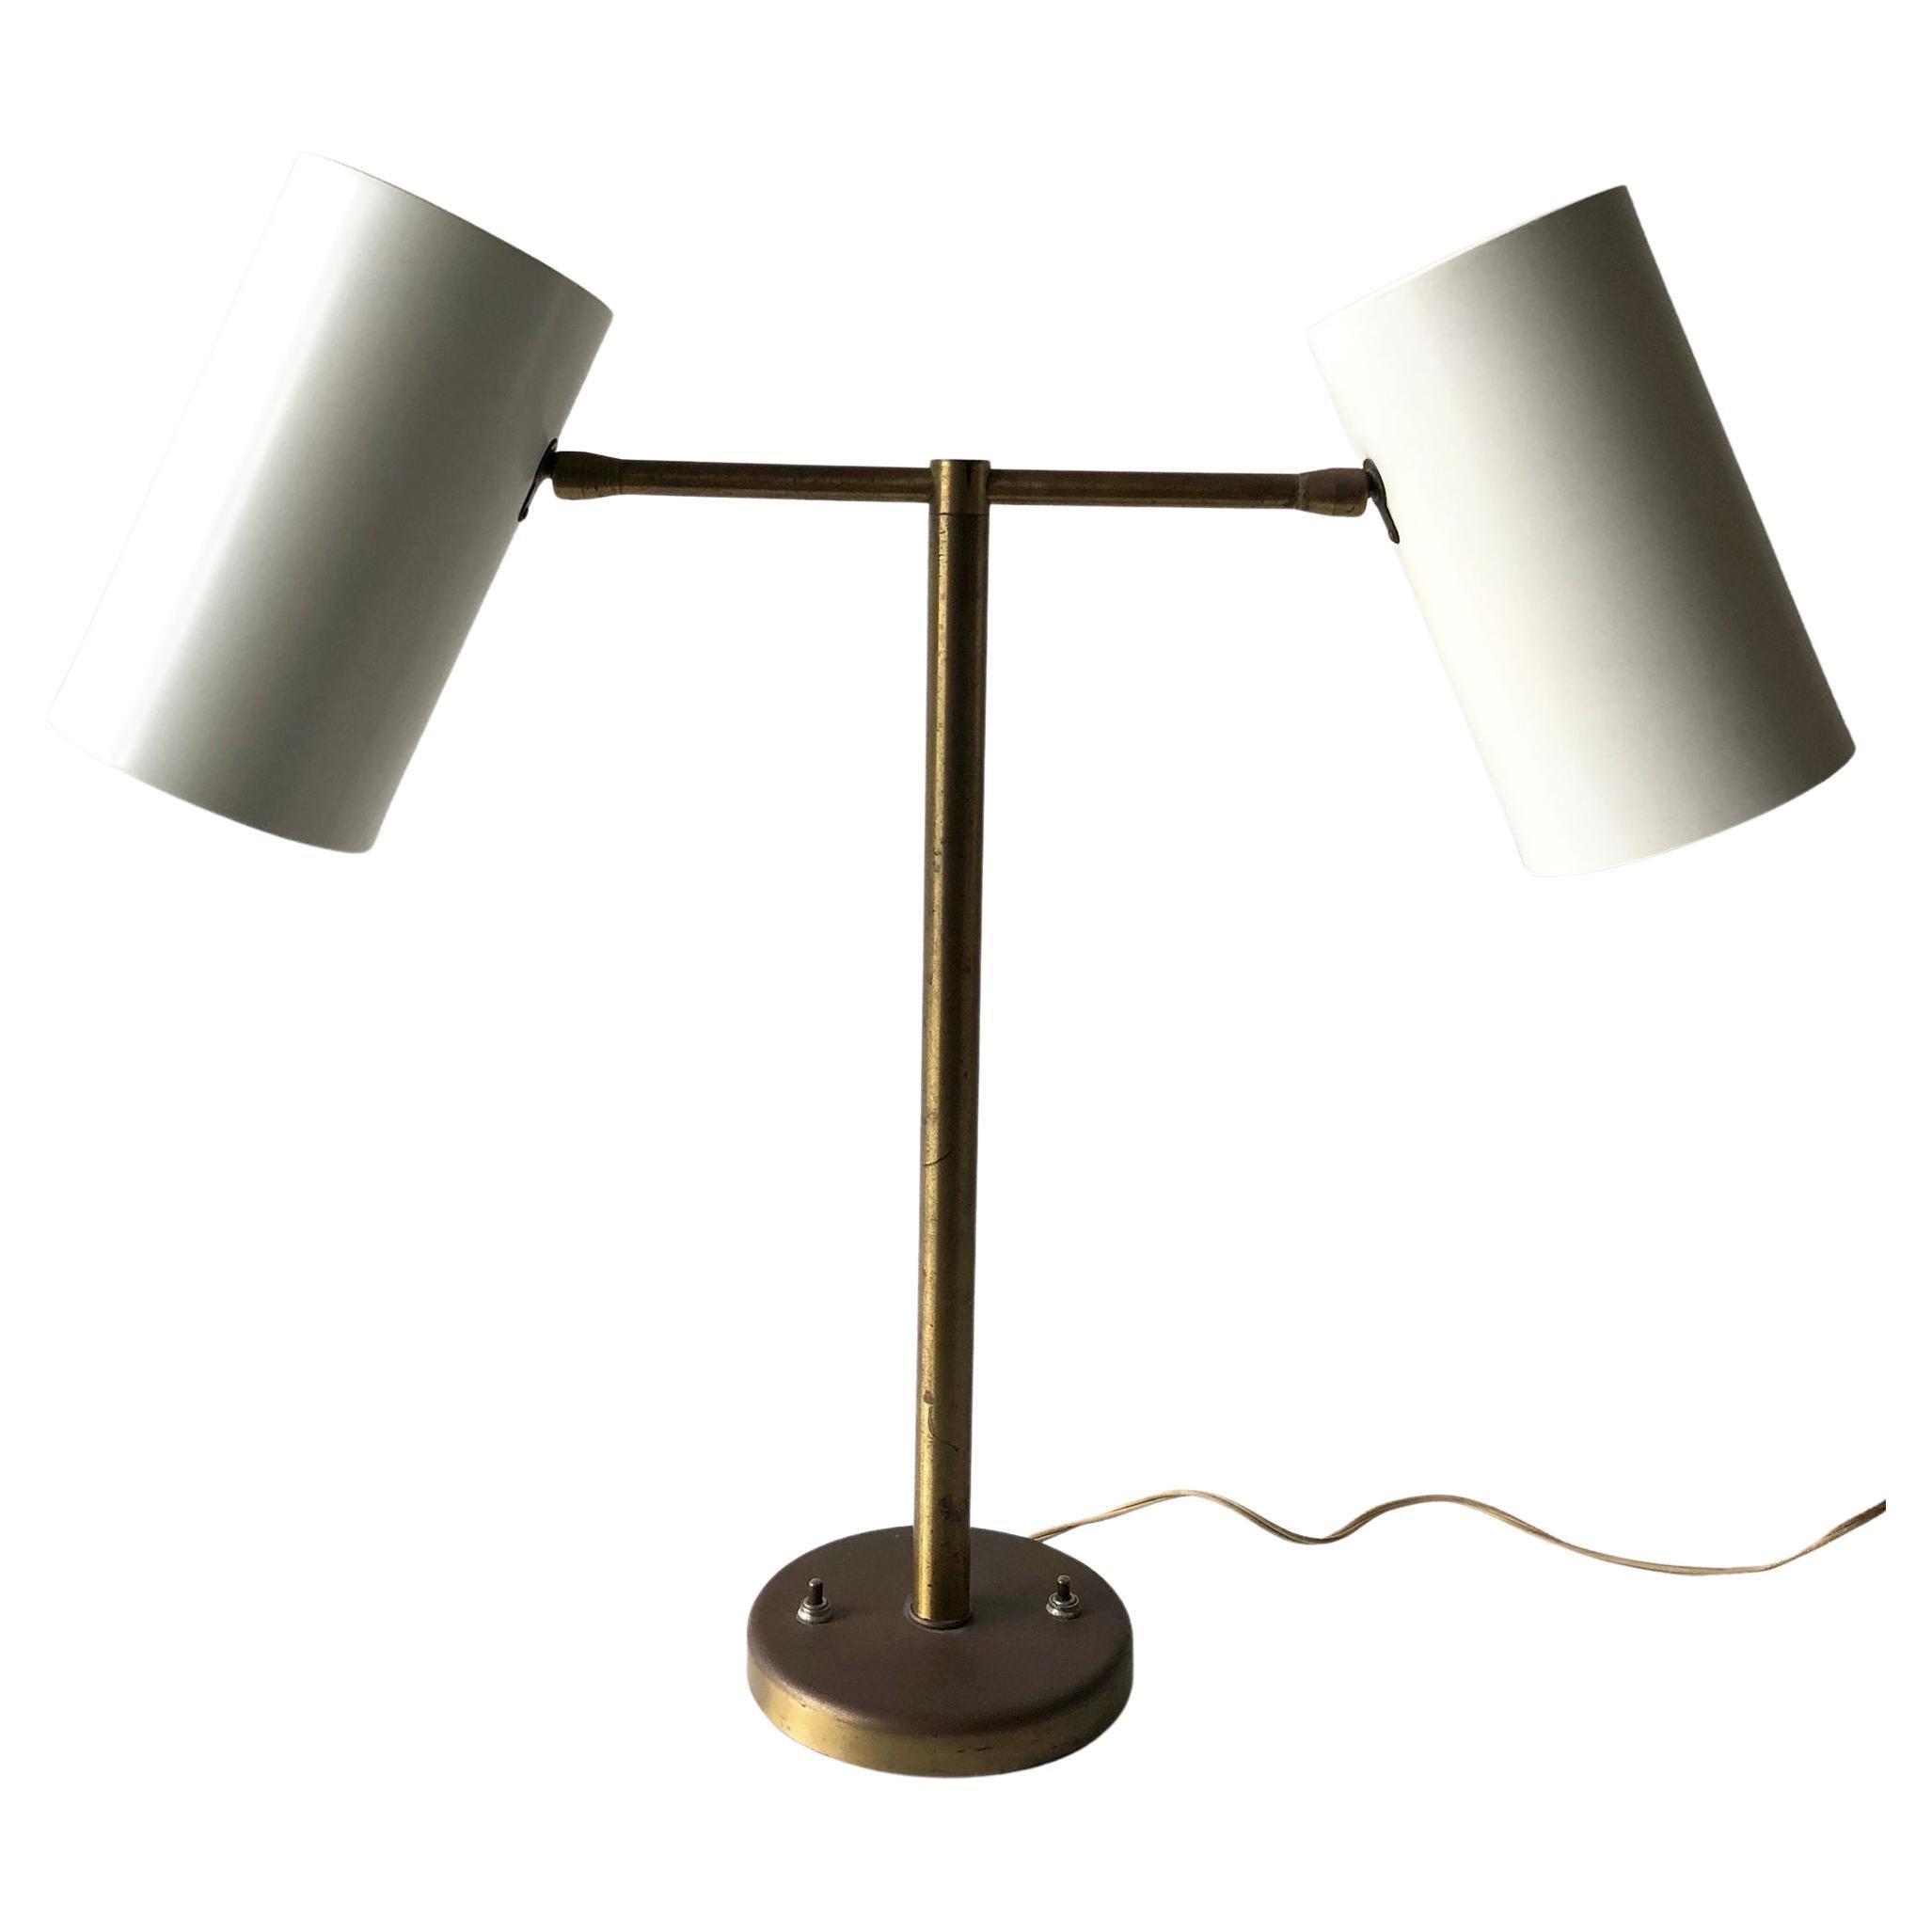 1950s adjustable double cone lamp designed by Greta Von Nessen.  Lamp measures 20.5